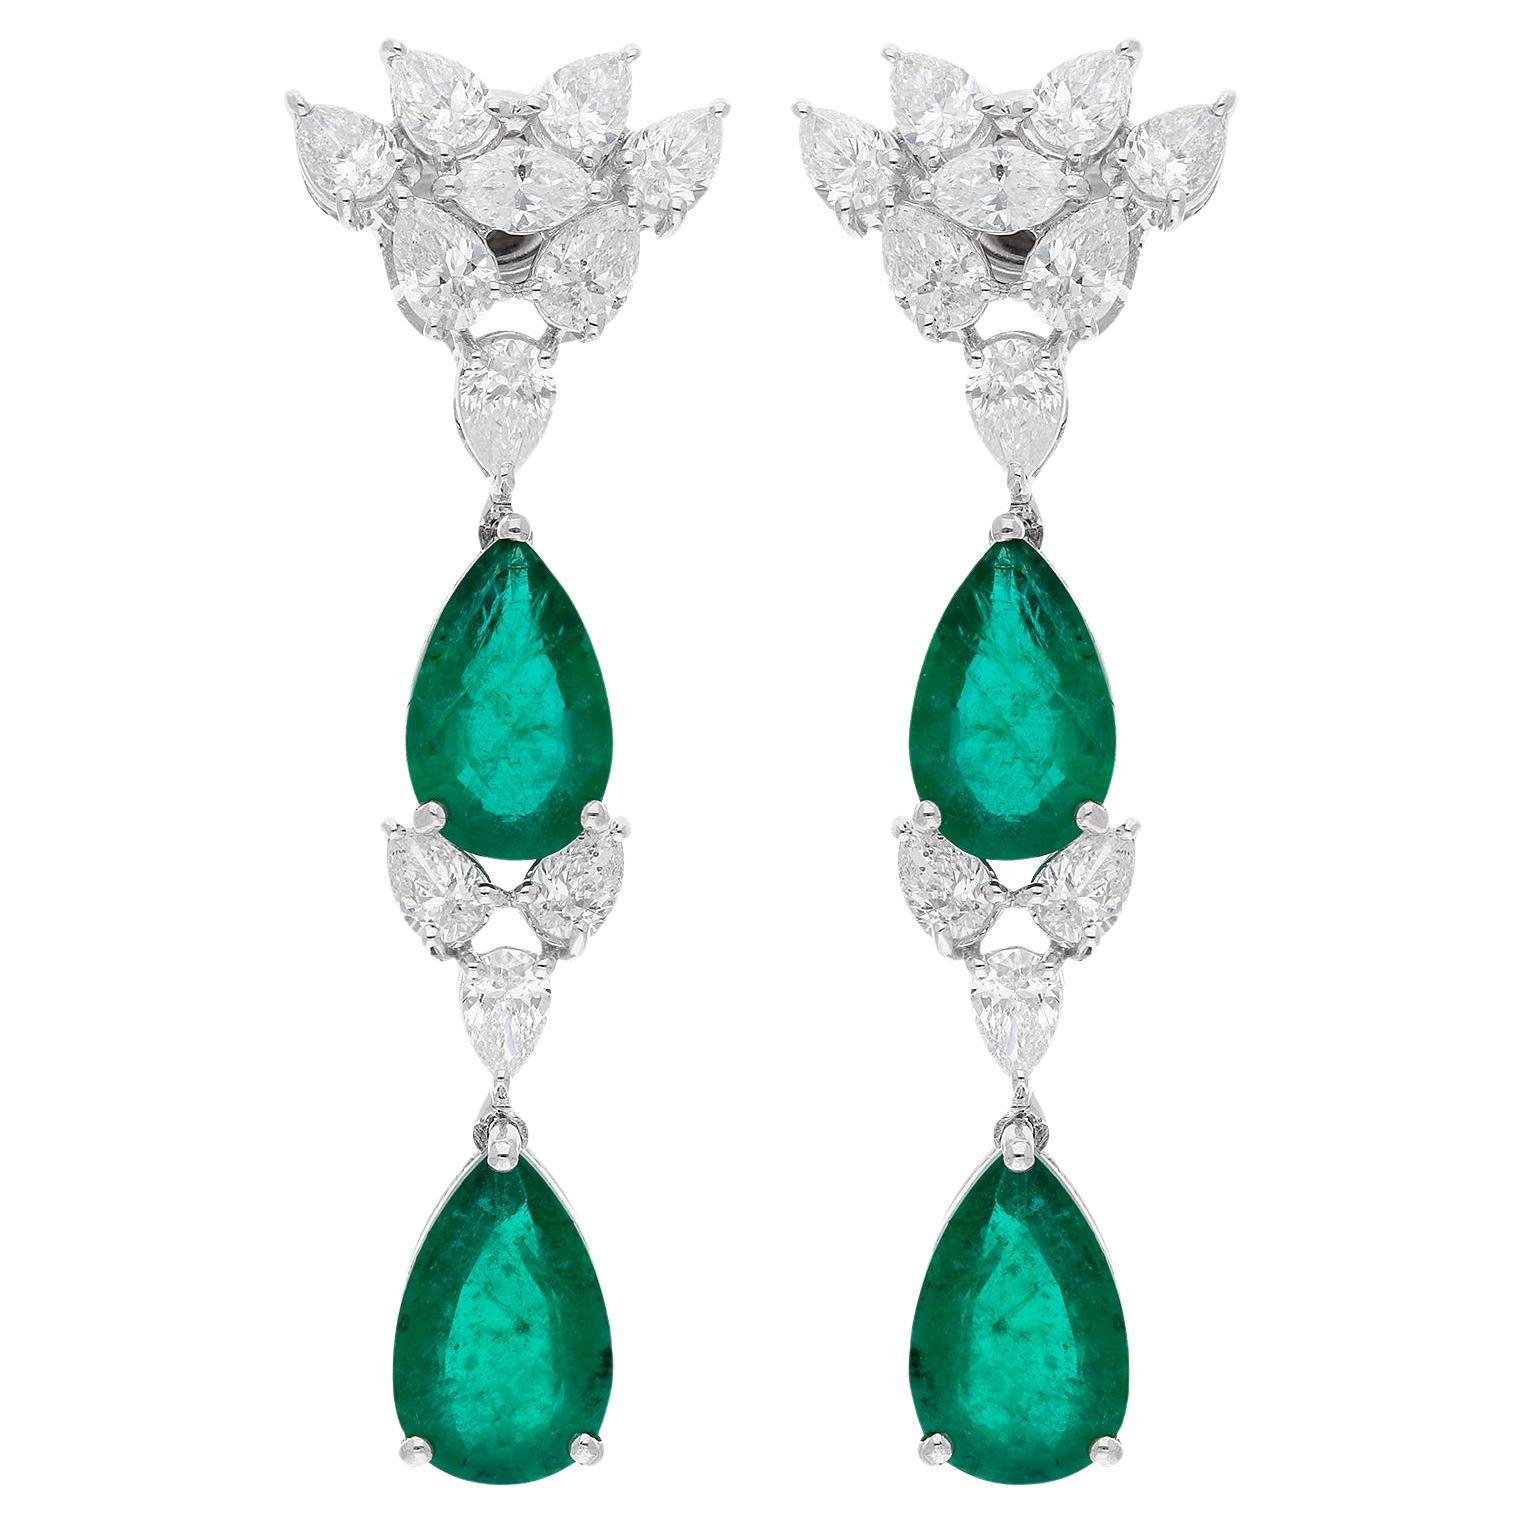 Natural Zambian Emerald Gemstone Dangle Earrings Diamond 14 Karat White Gold